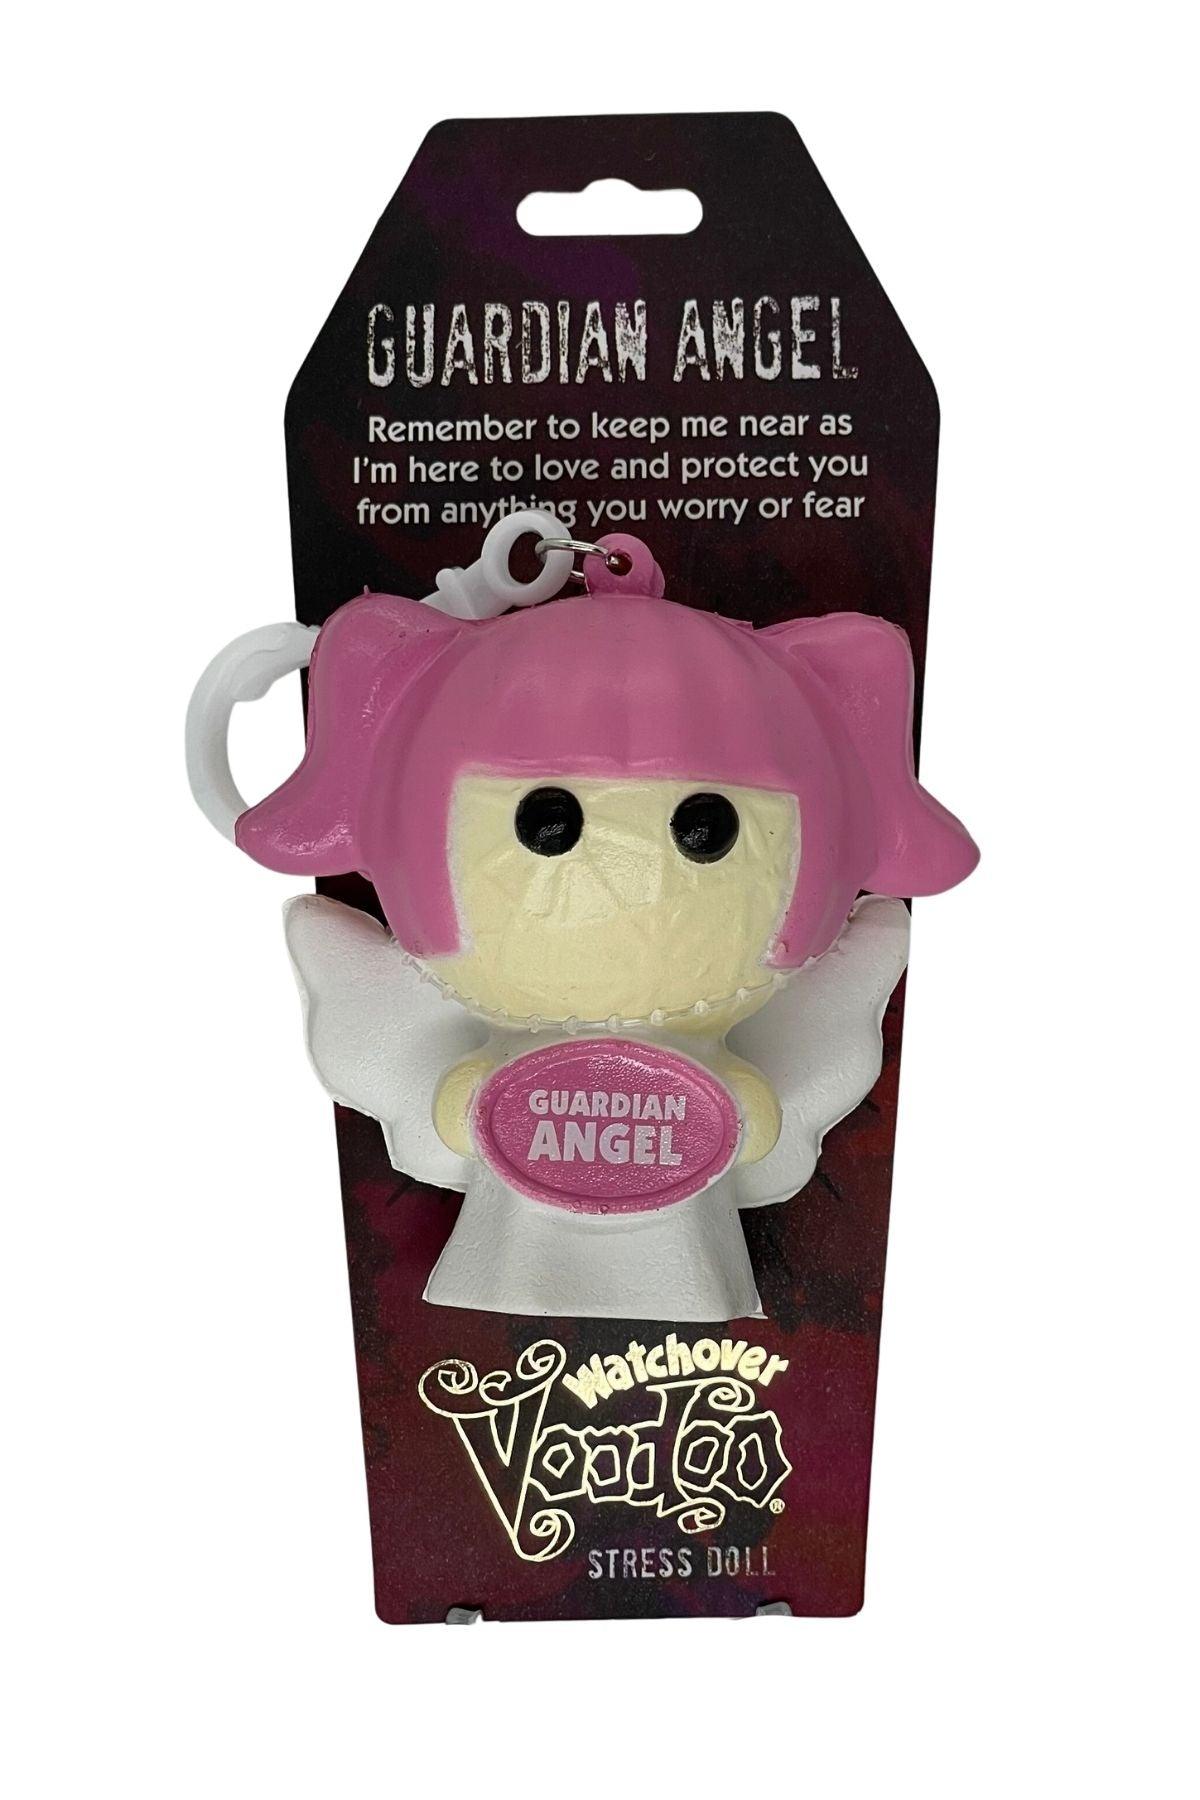 Voodoo Stress Doll - Guardian Angel - Watchover Voodoo - Stress Doll